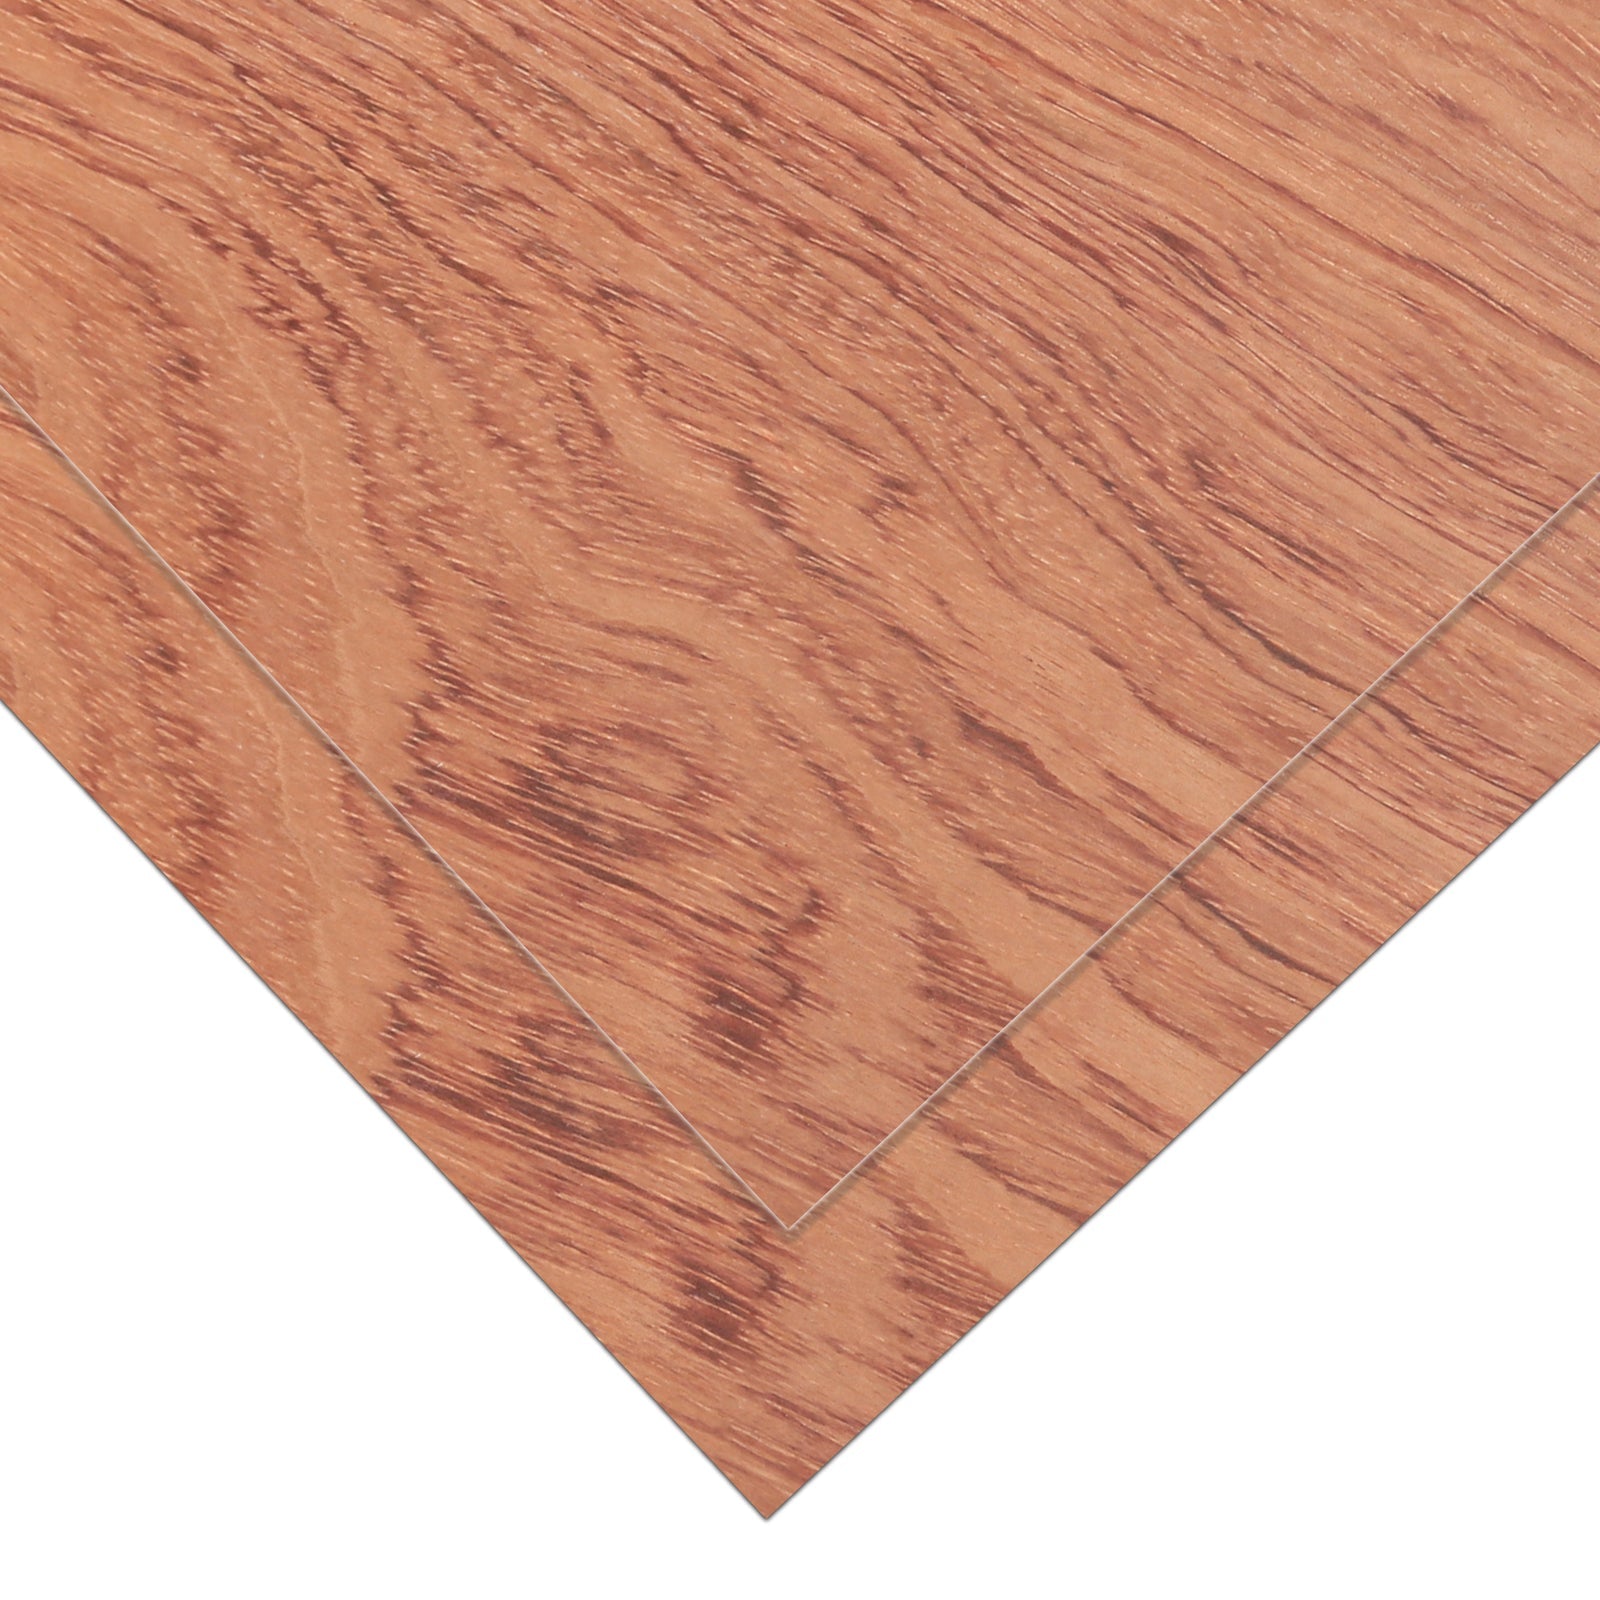 6pcs Bubinga Brazilian Rosewood Plywood 12 x 12 Unfinished Wood for Crafts Laser Engraving